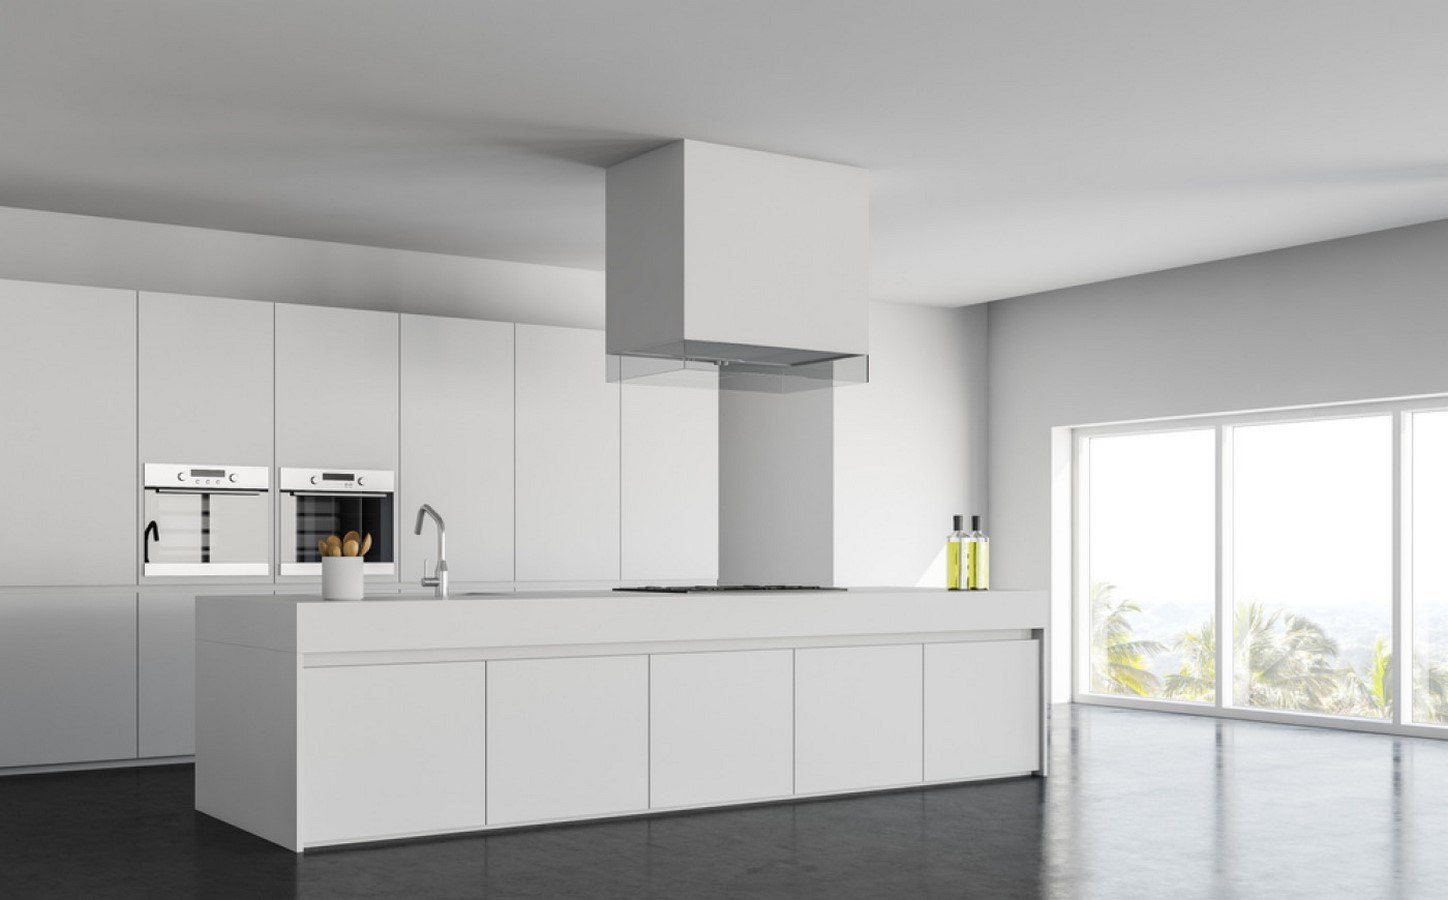 10 Semi Modular Kitchen Designs for your home - Sheet1